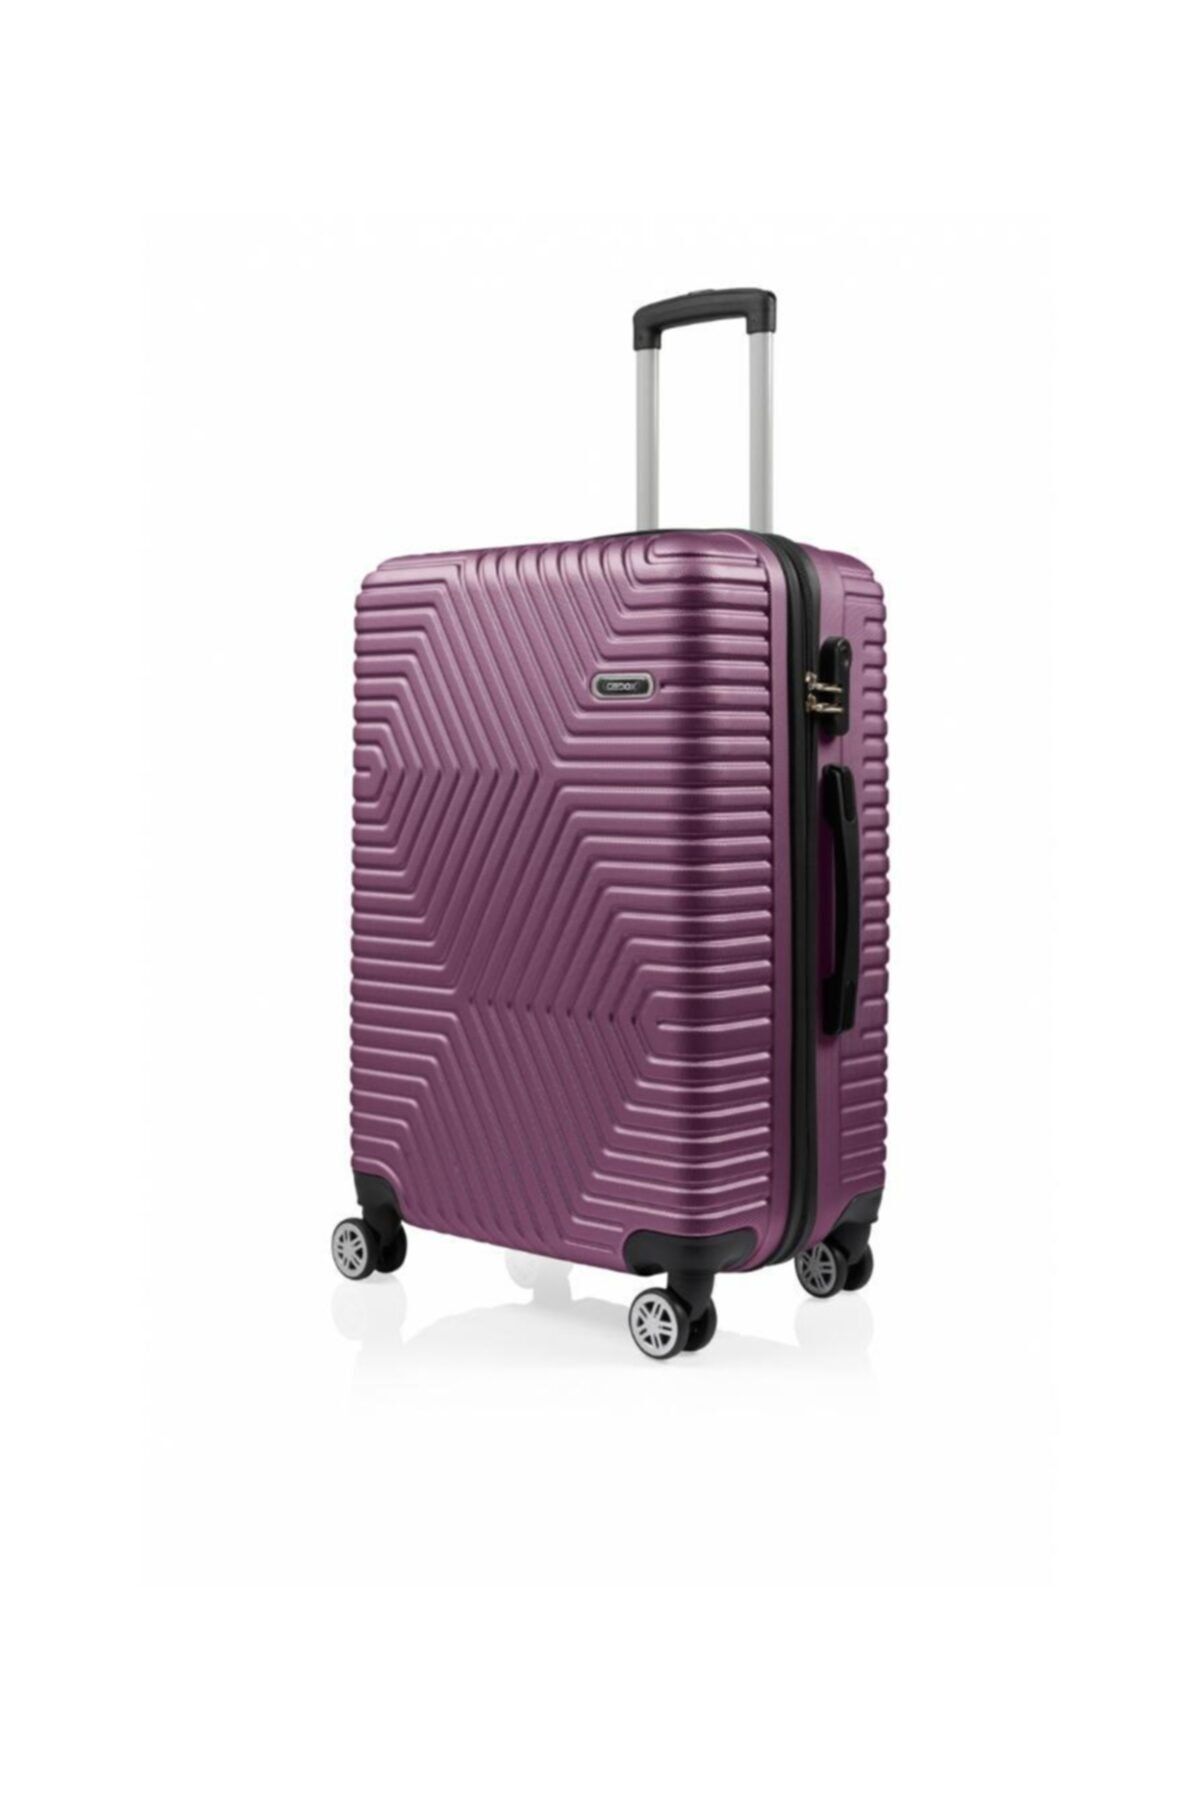 DZC KUZENLER AVM G&d Gedox Polo Suitcase Abs Küçük Boy Lüx Seyahat Valiz